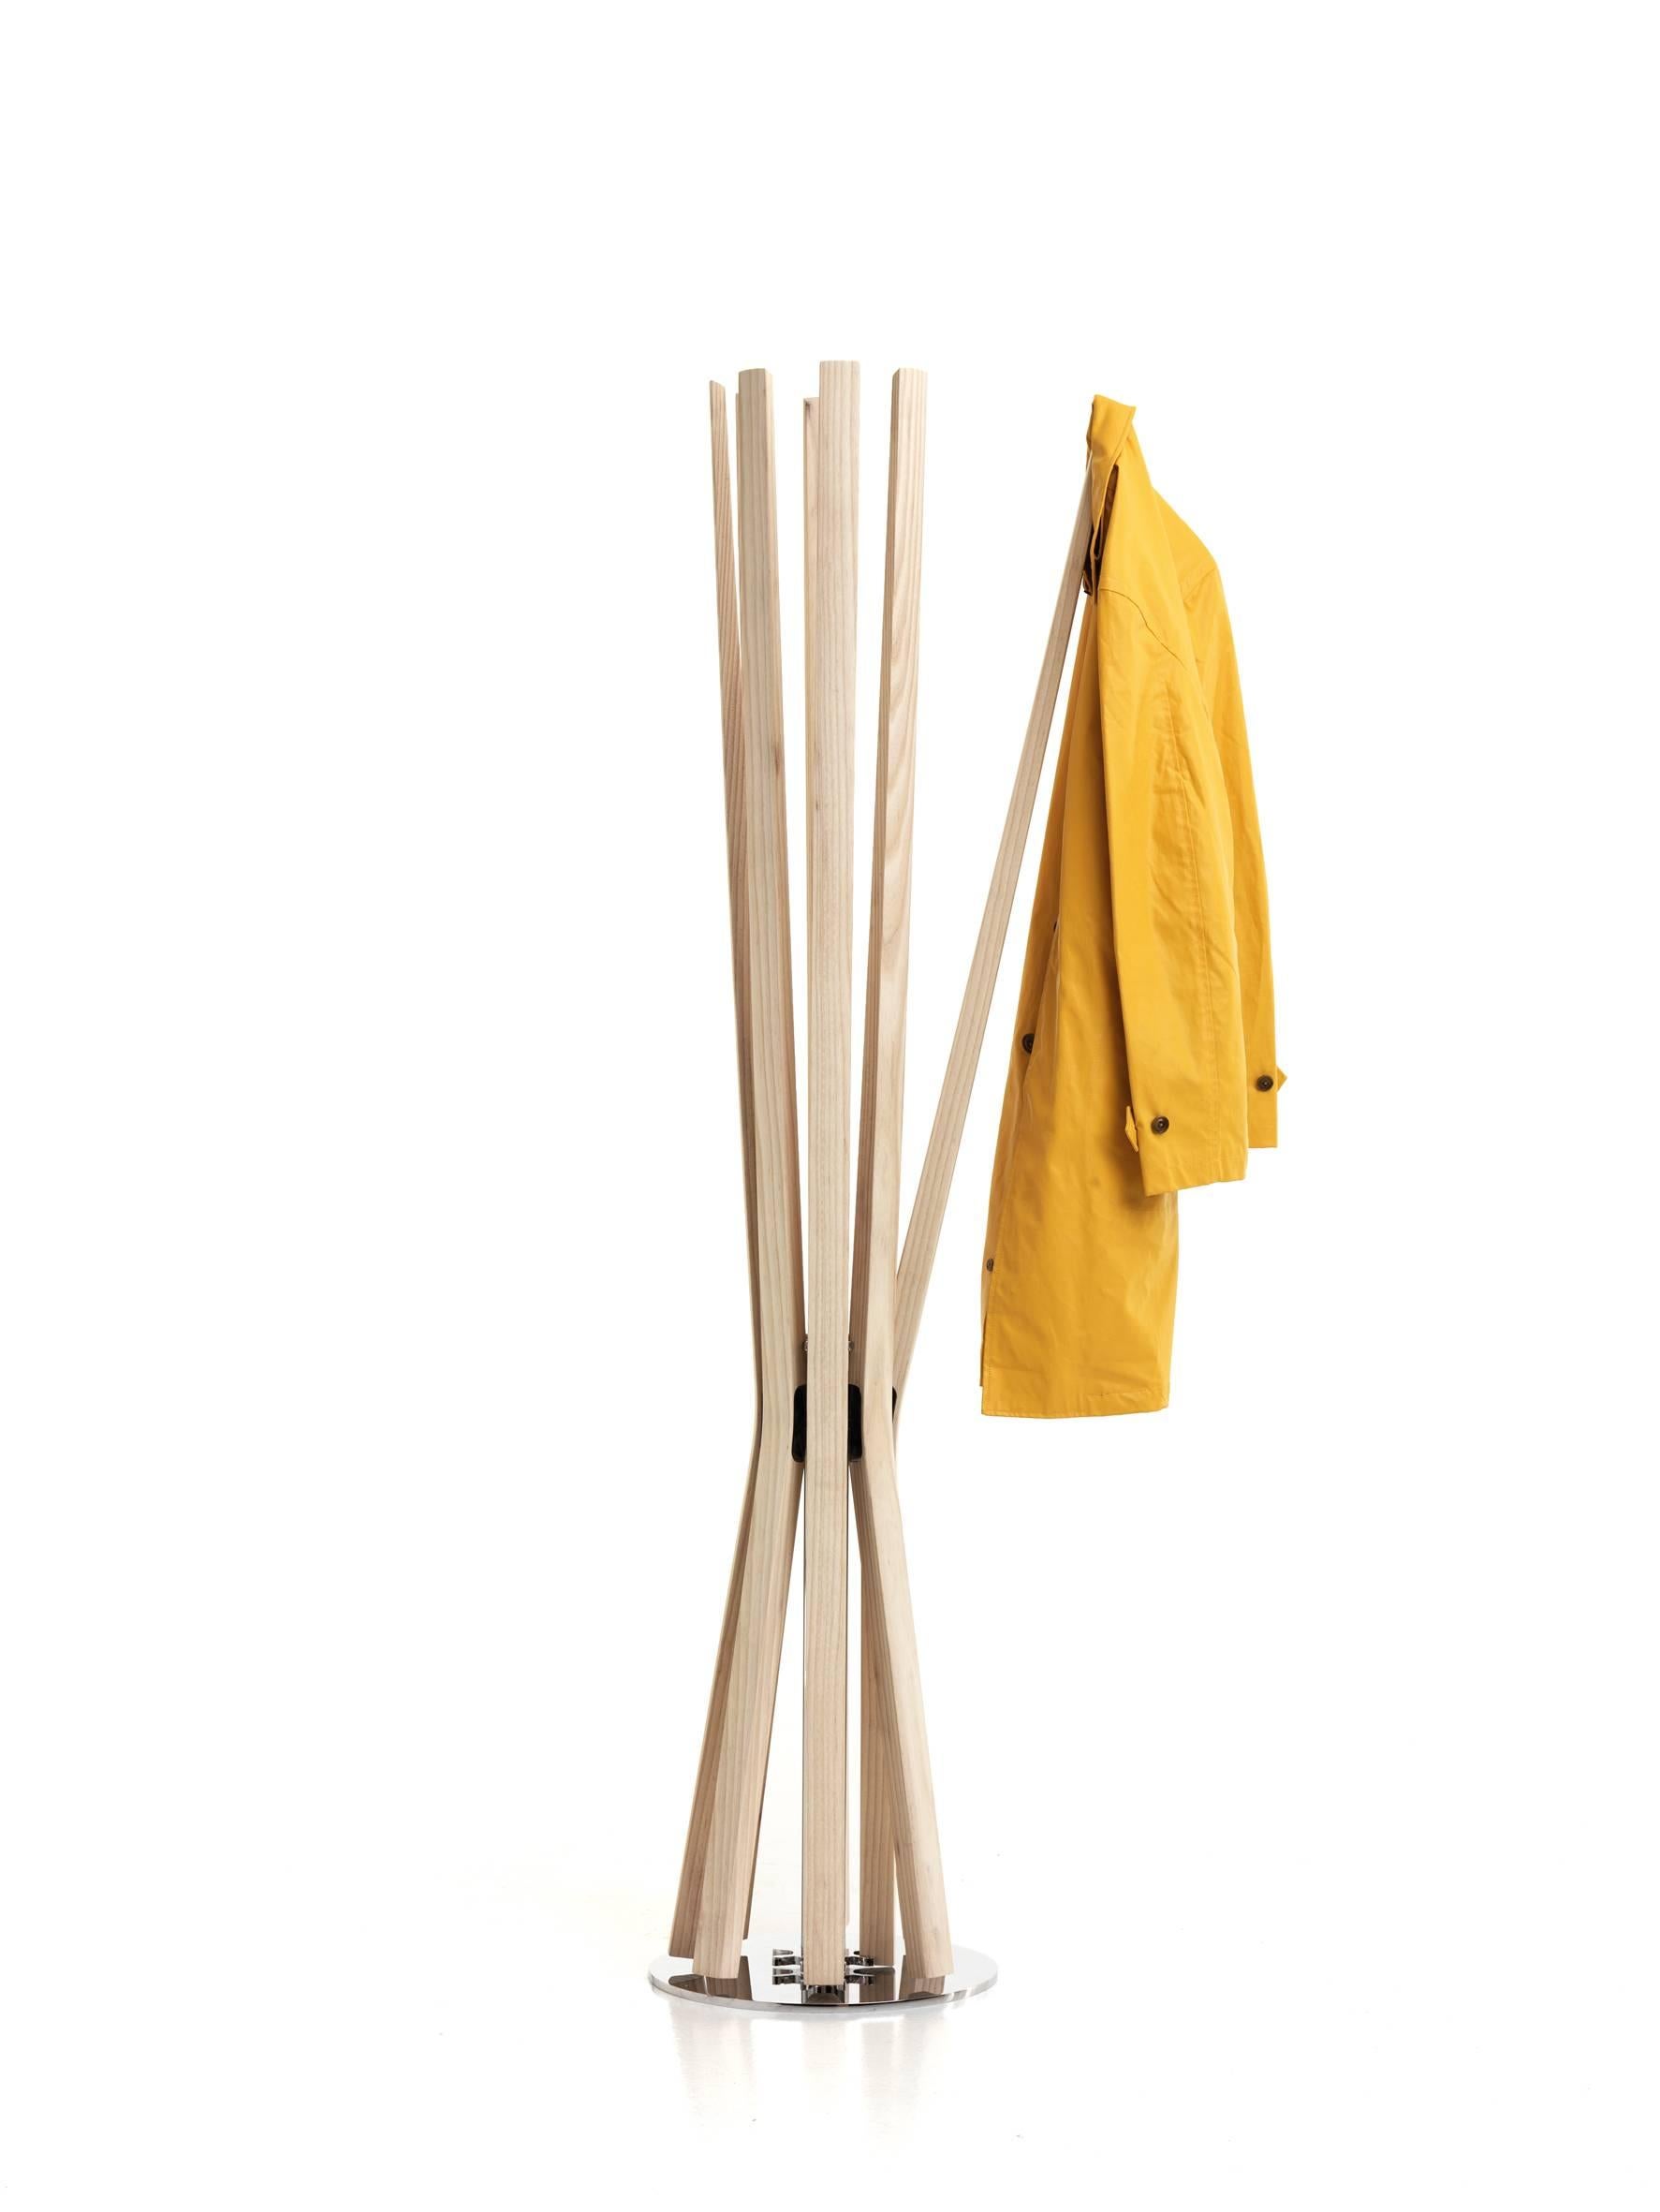 Modern Baleri Italia Bloom Coat Hanger in Solid Natural Material by Jeff Miller For Sale